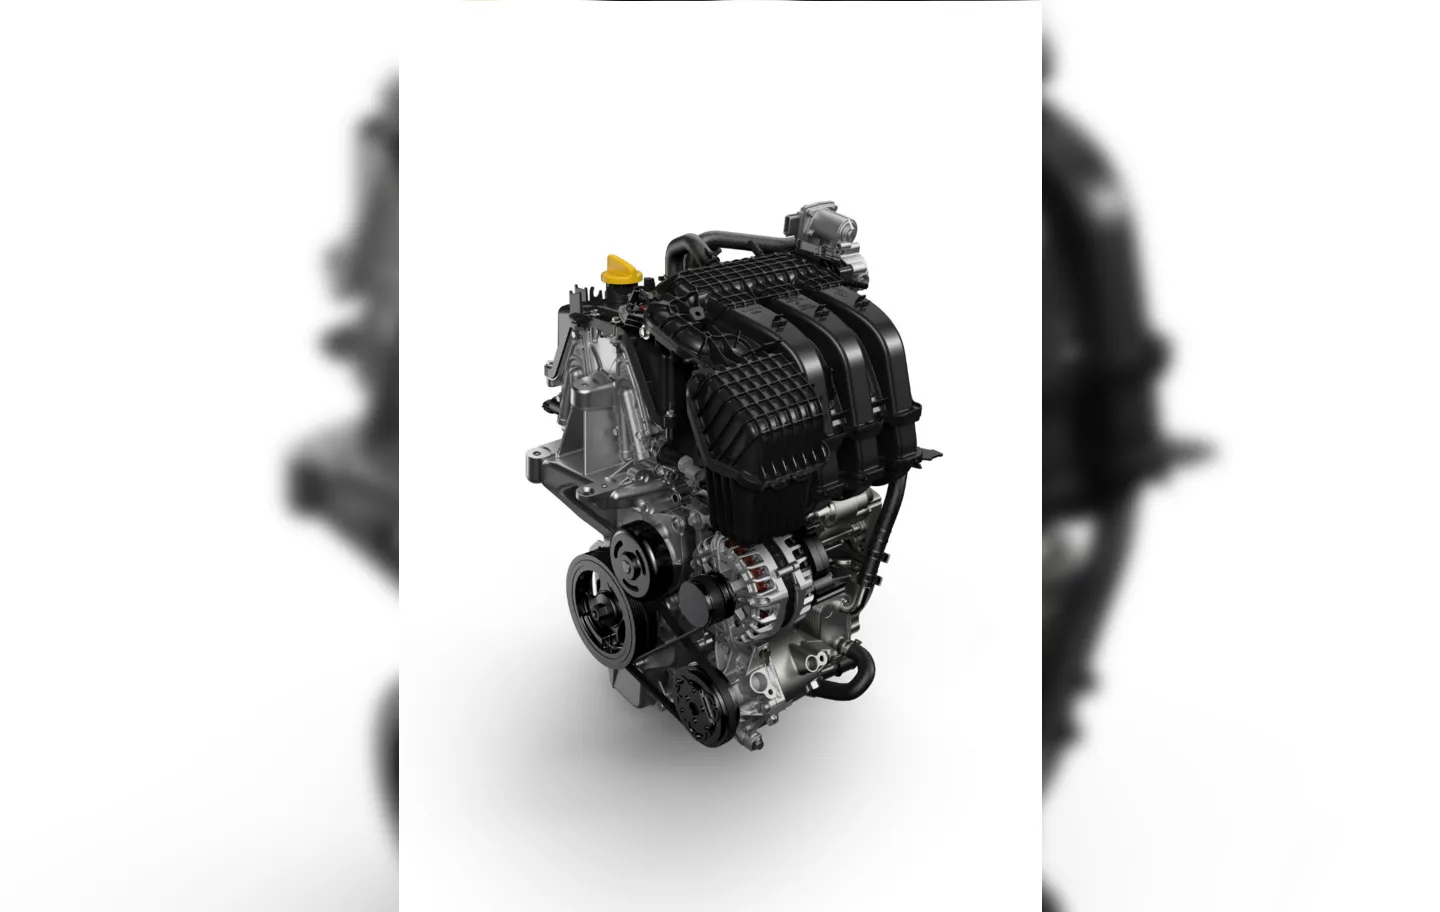 Motor Renault 1.0 3 cilindros estreou no Sandero, com 82 cv